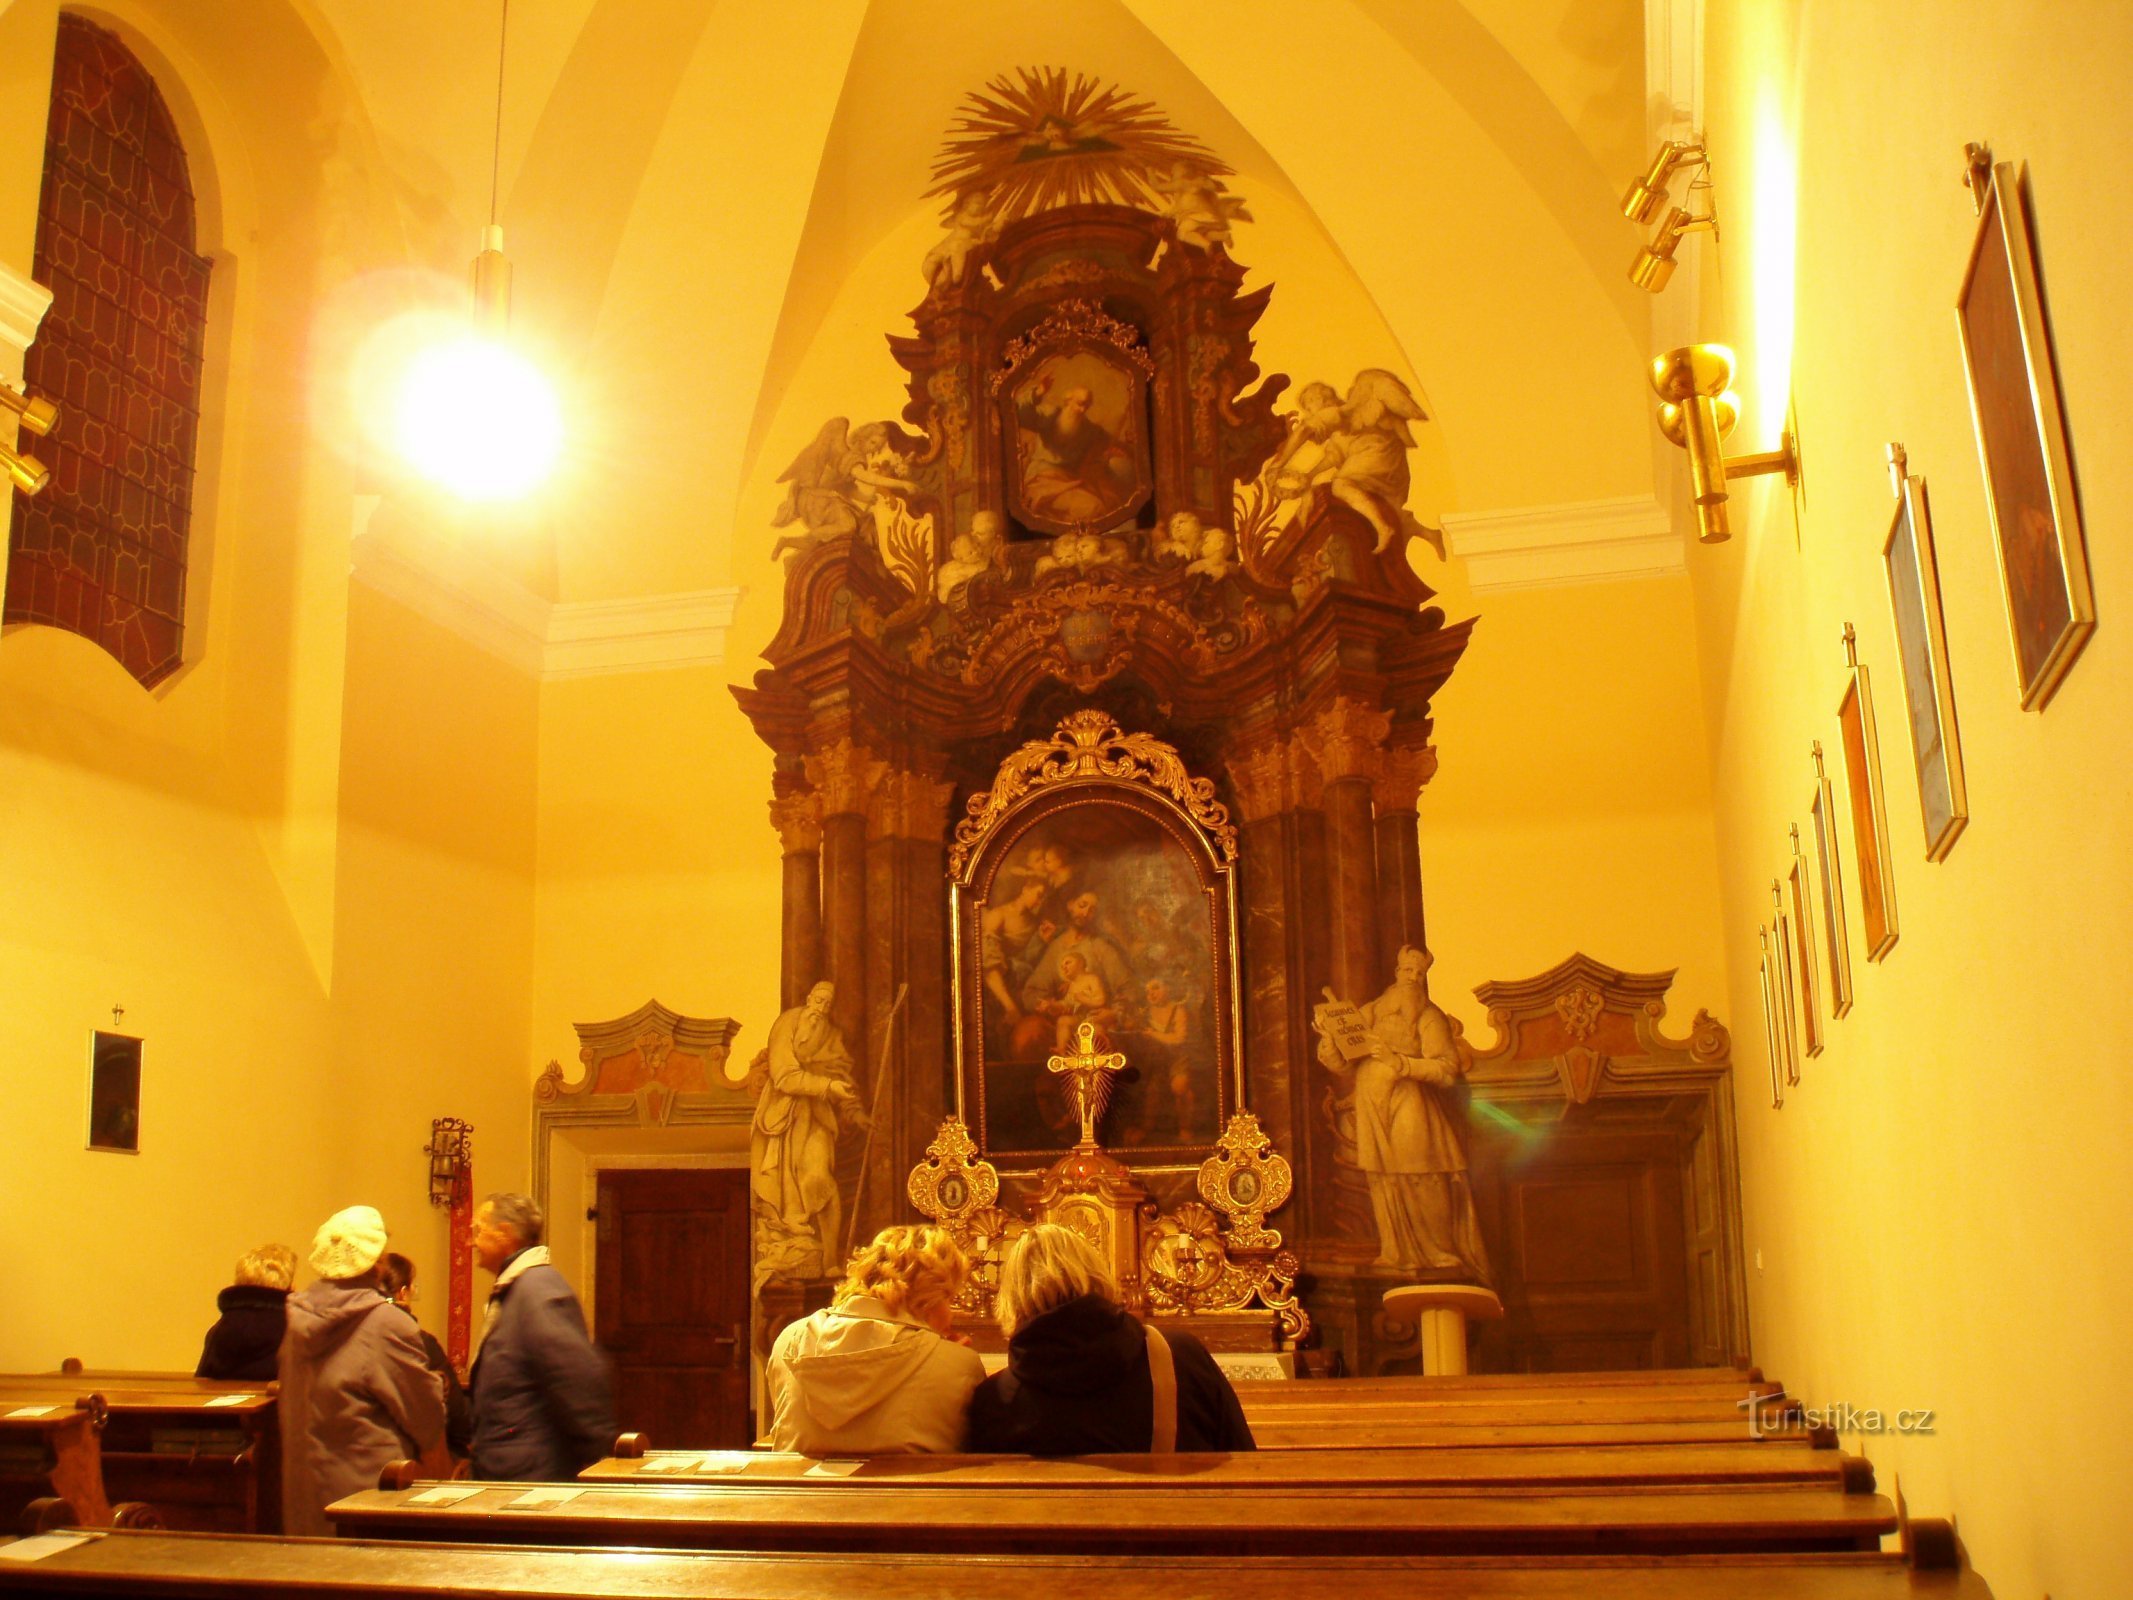 St. kappelin sisustus. Josefa (Hradec Králové, 19.3.2010)